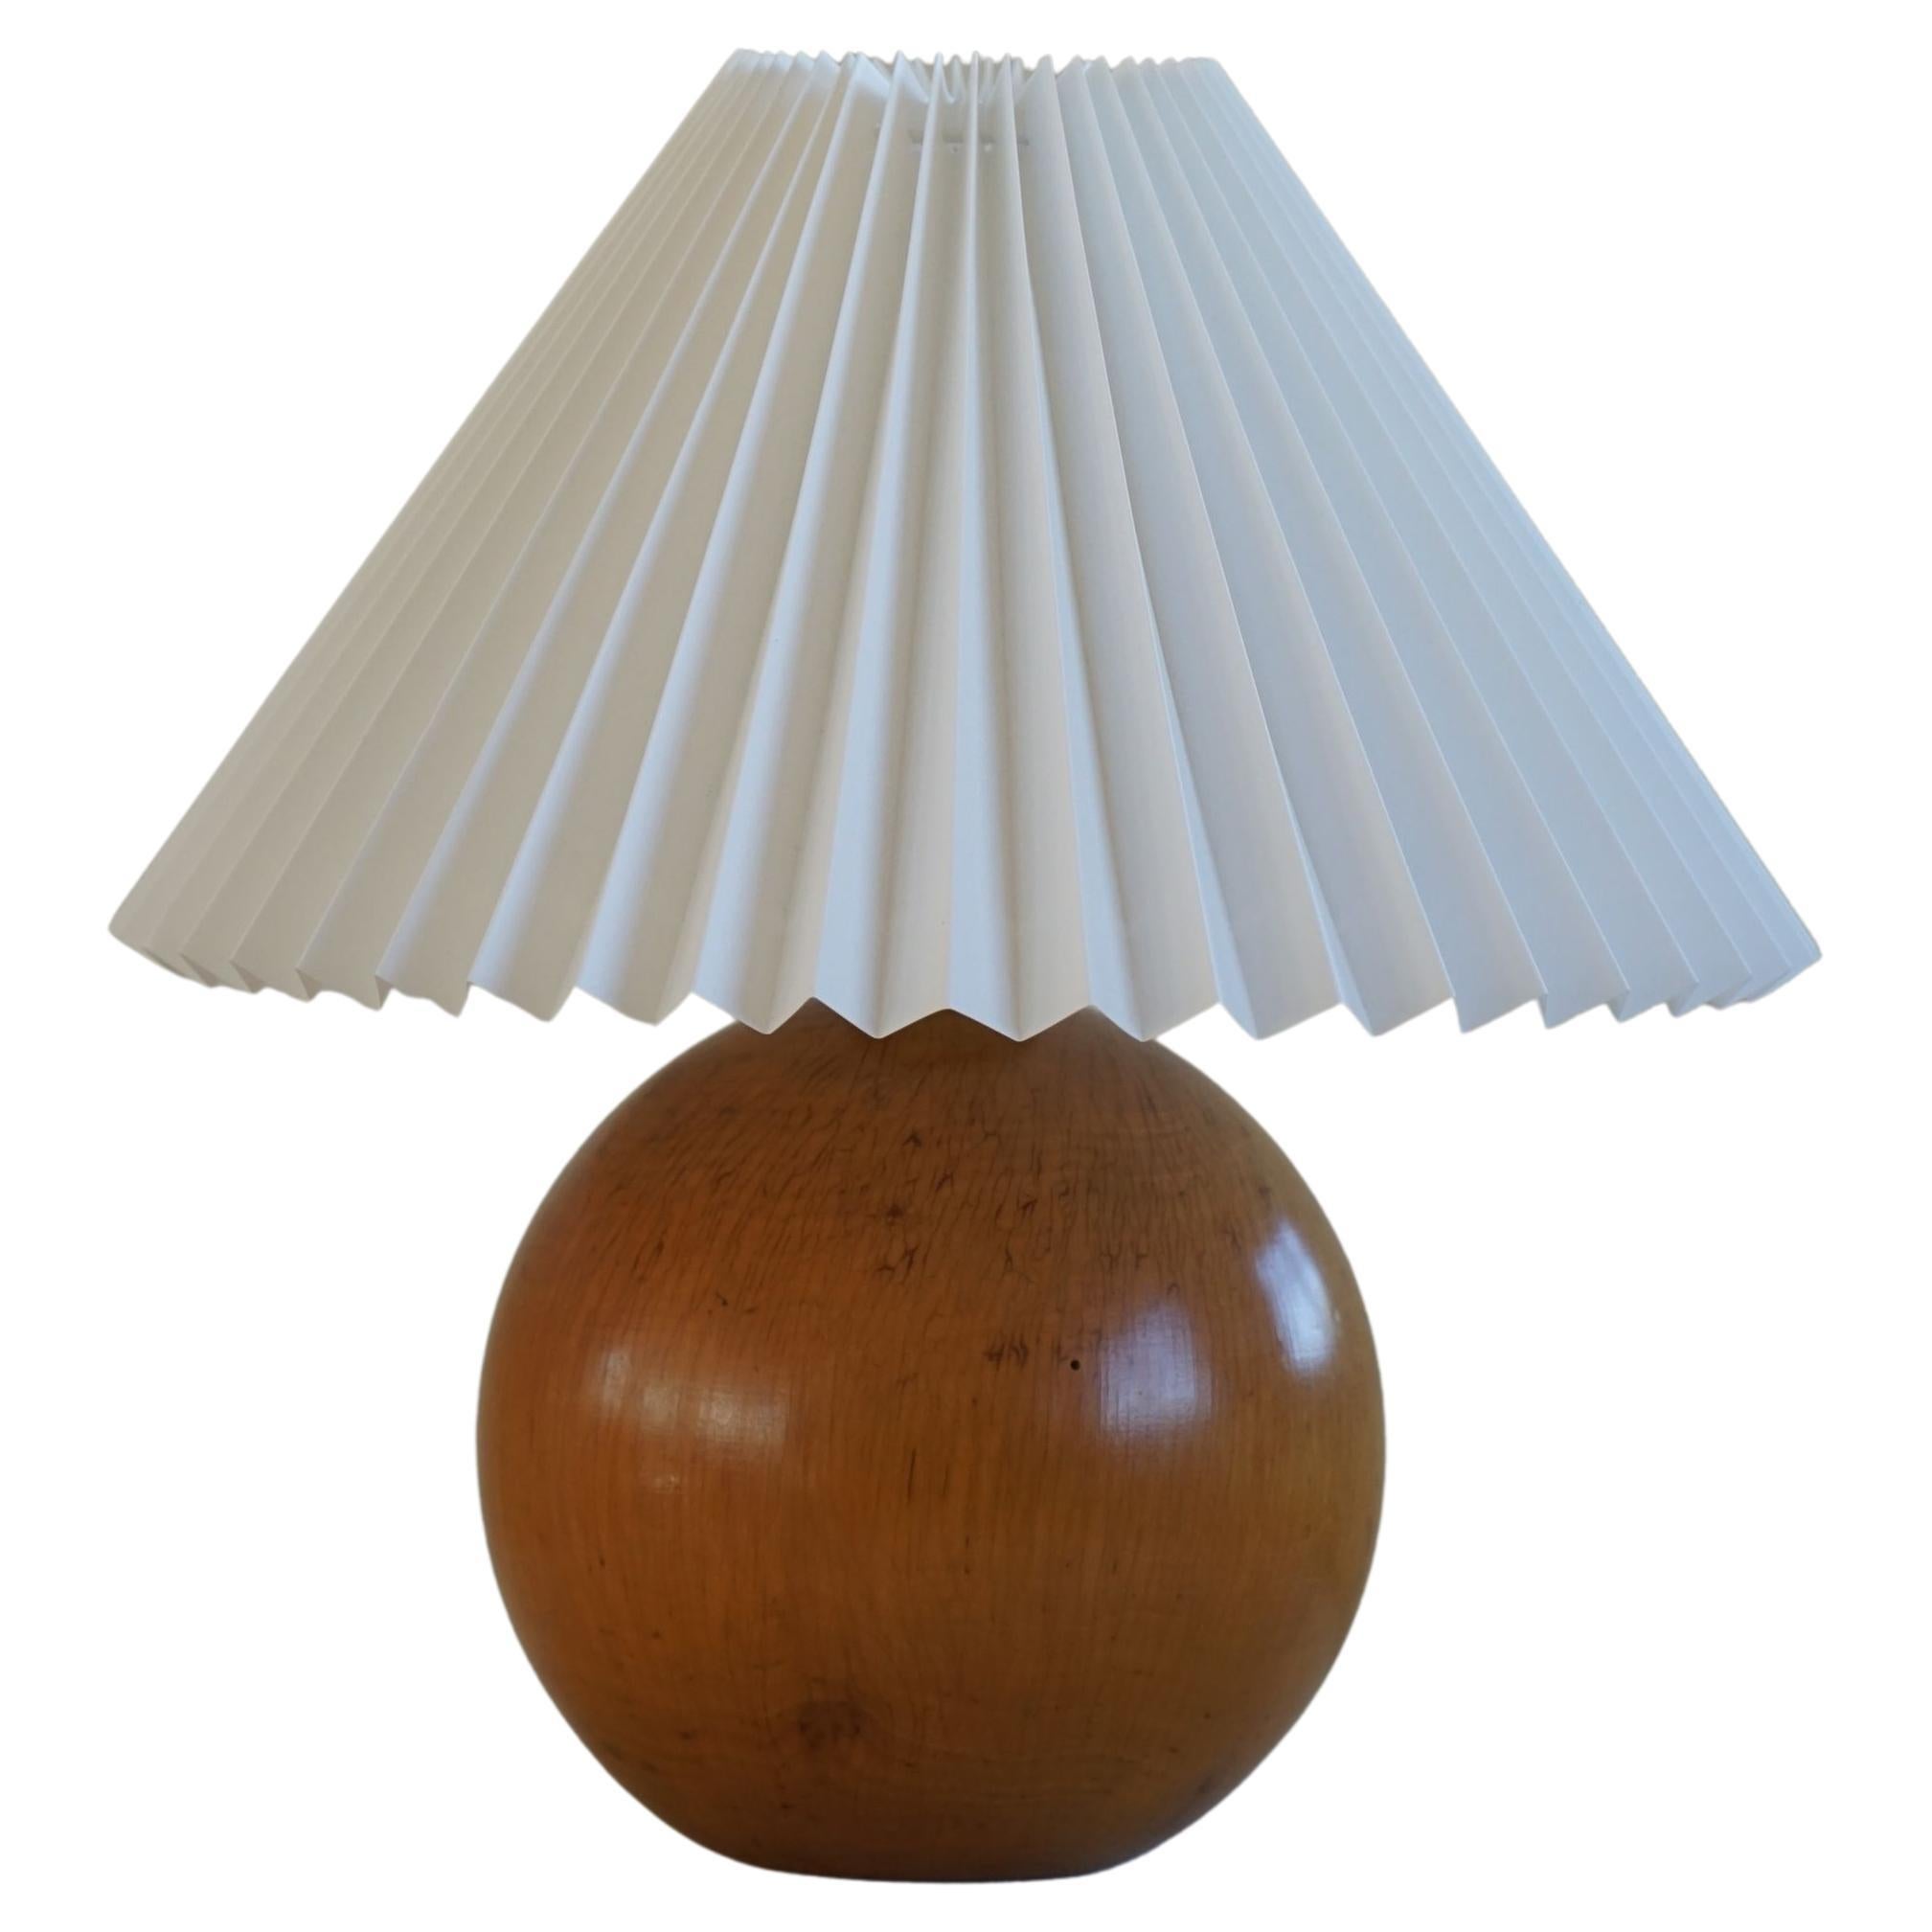 Danish Art Deco Round Wooden Table Lamp in Birch, 1930s